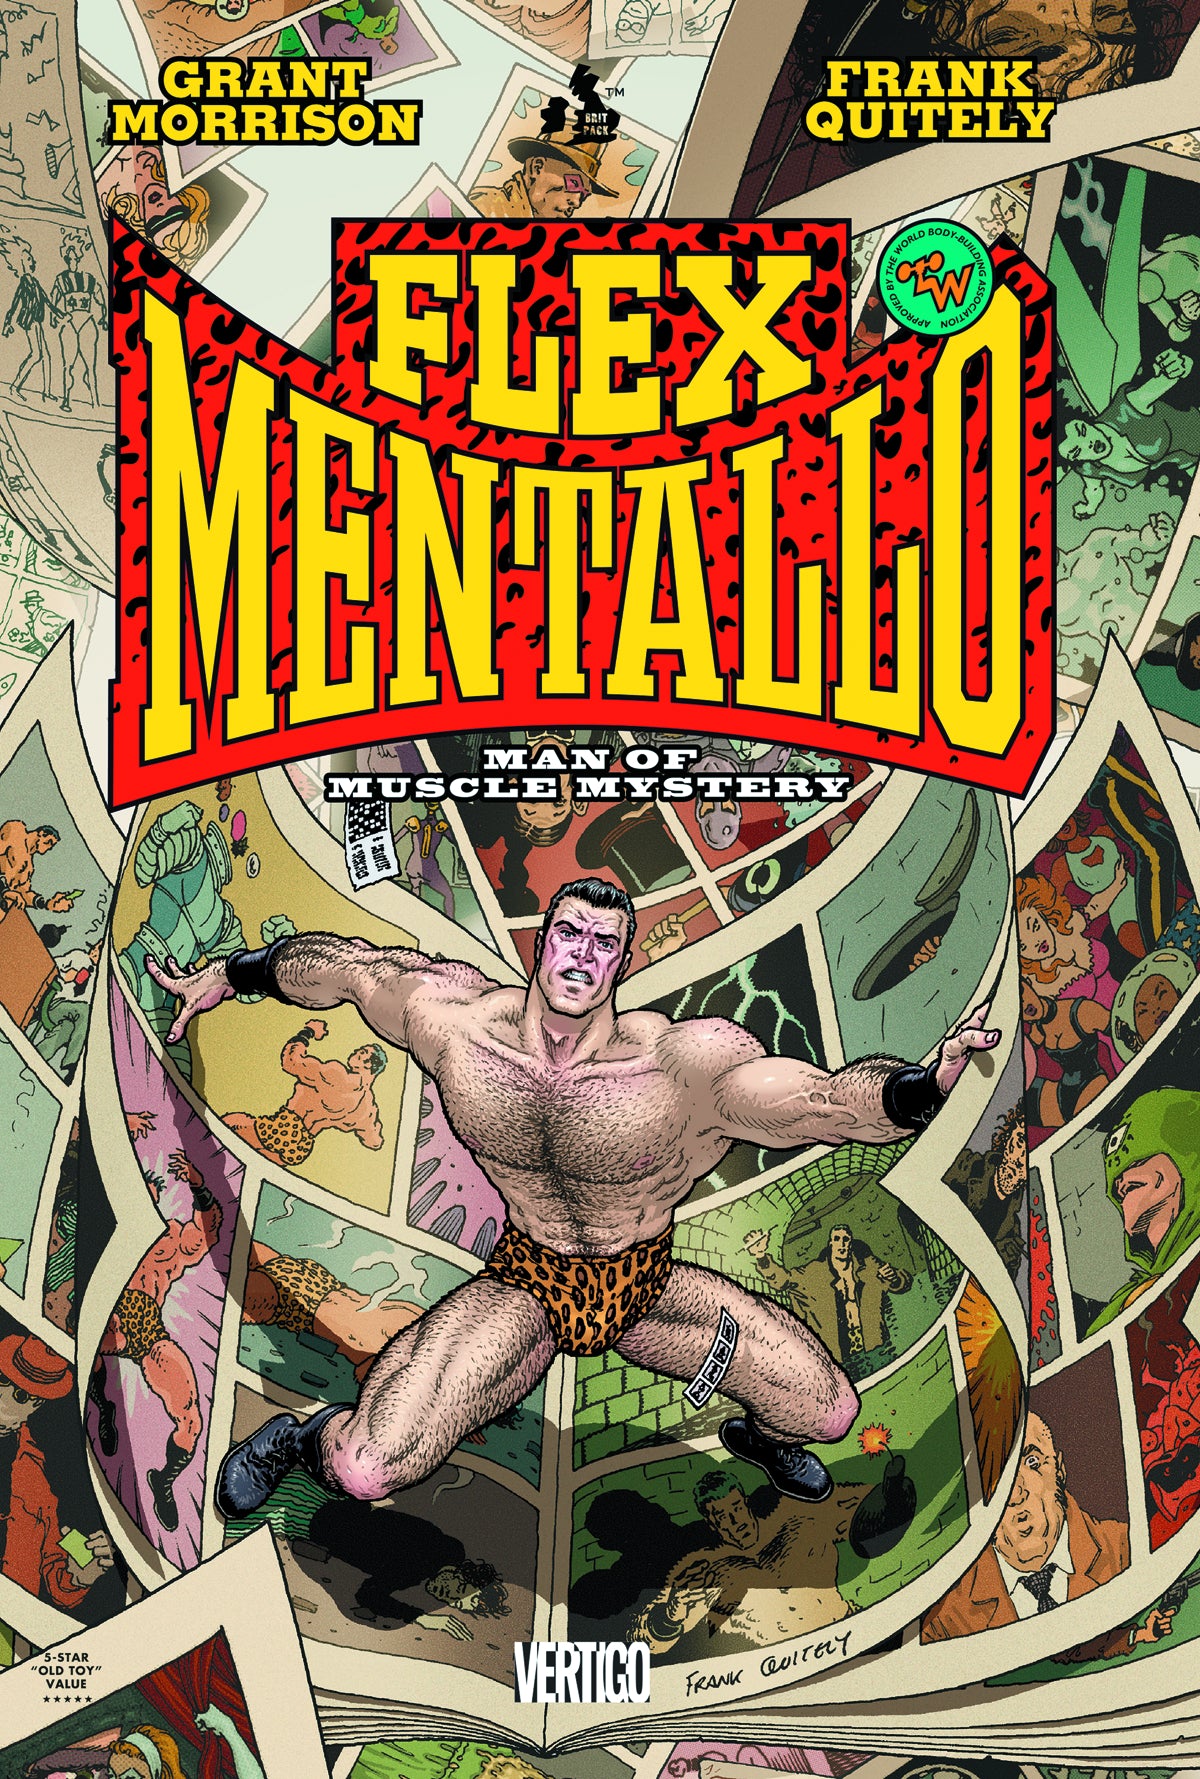 FLEX MENTALLO: MAN OF MUSCLE MYSTERY (MR)